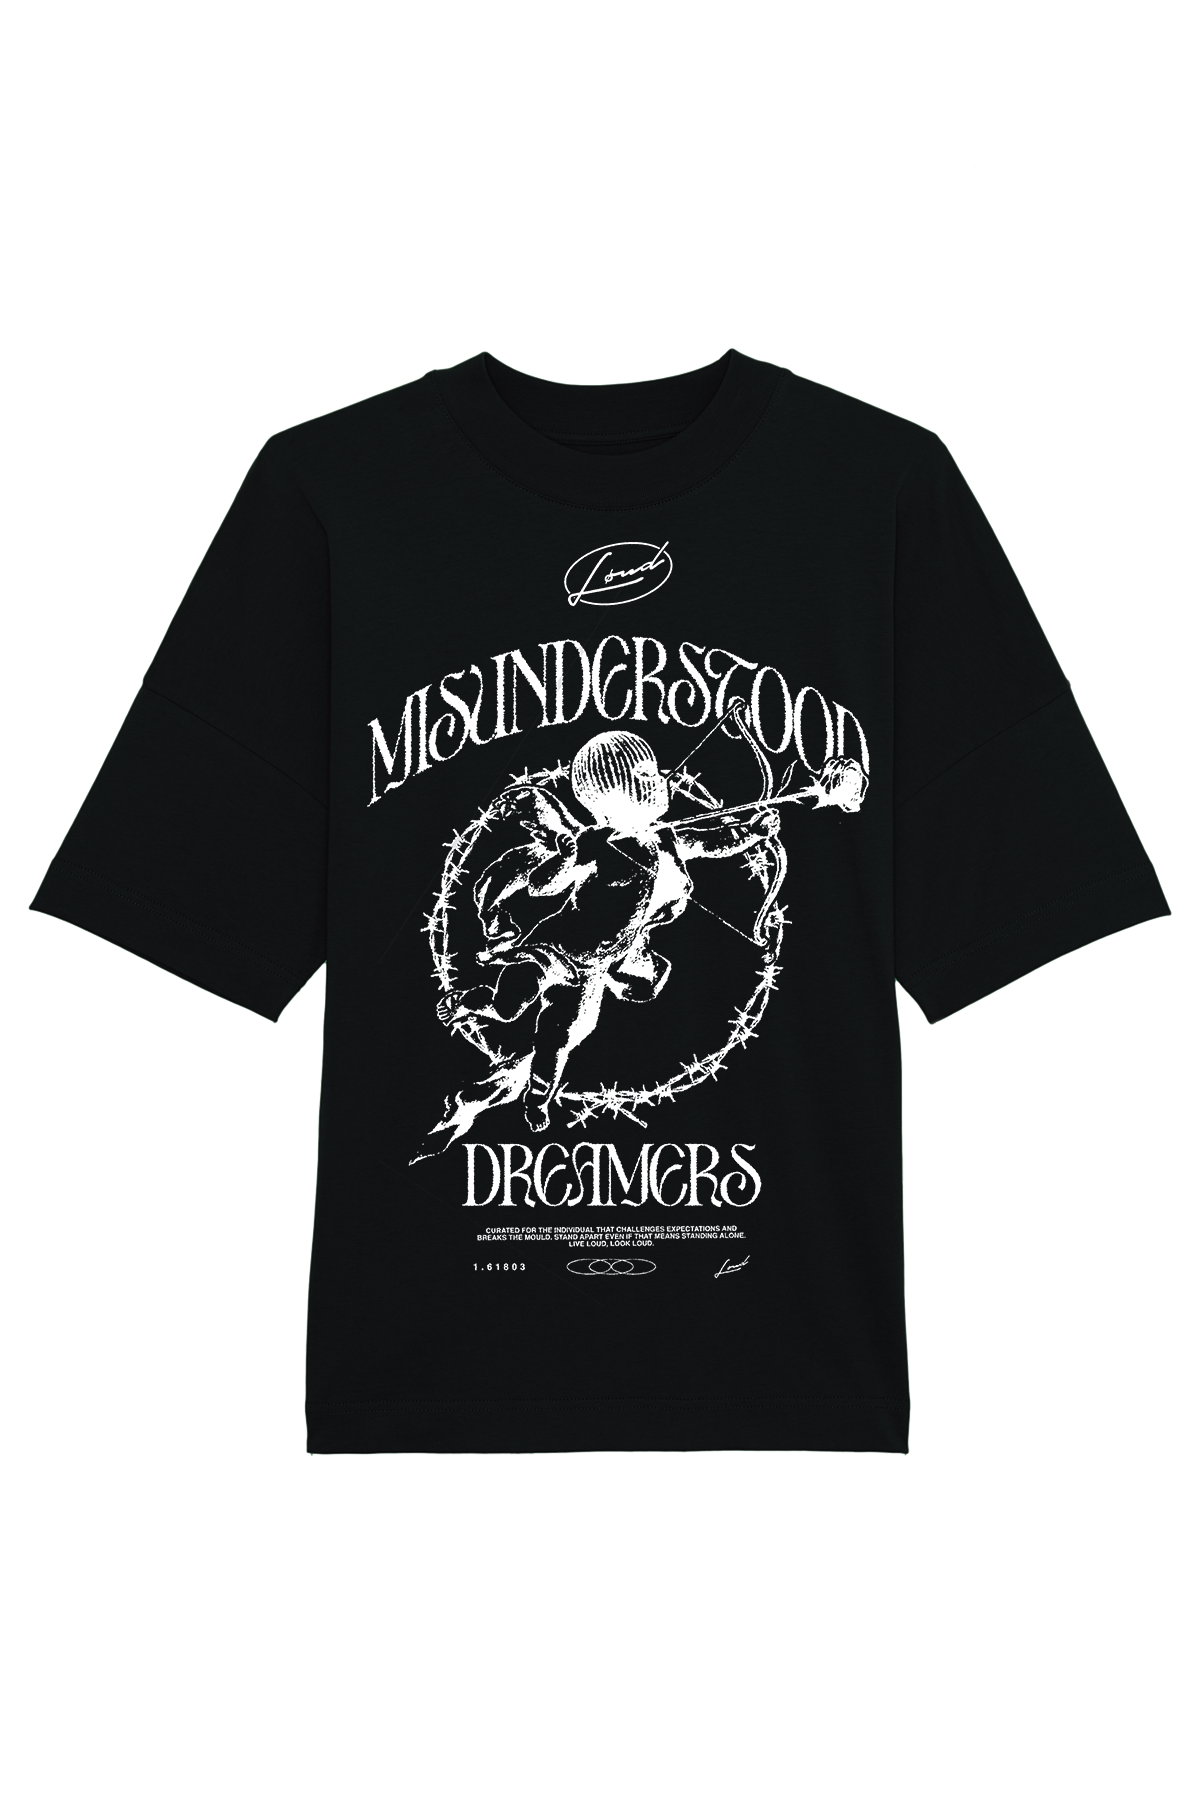 Misunderstood Cherub - Black T-Shirt - Live Look Loud